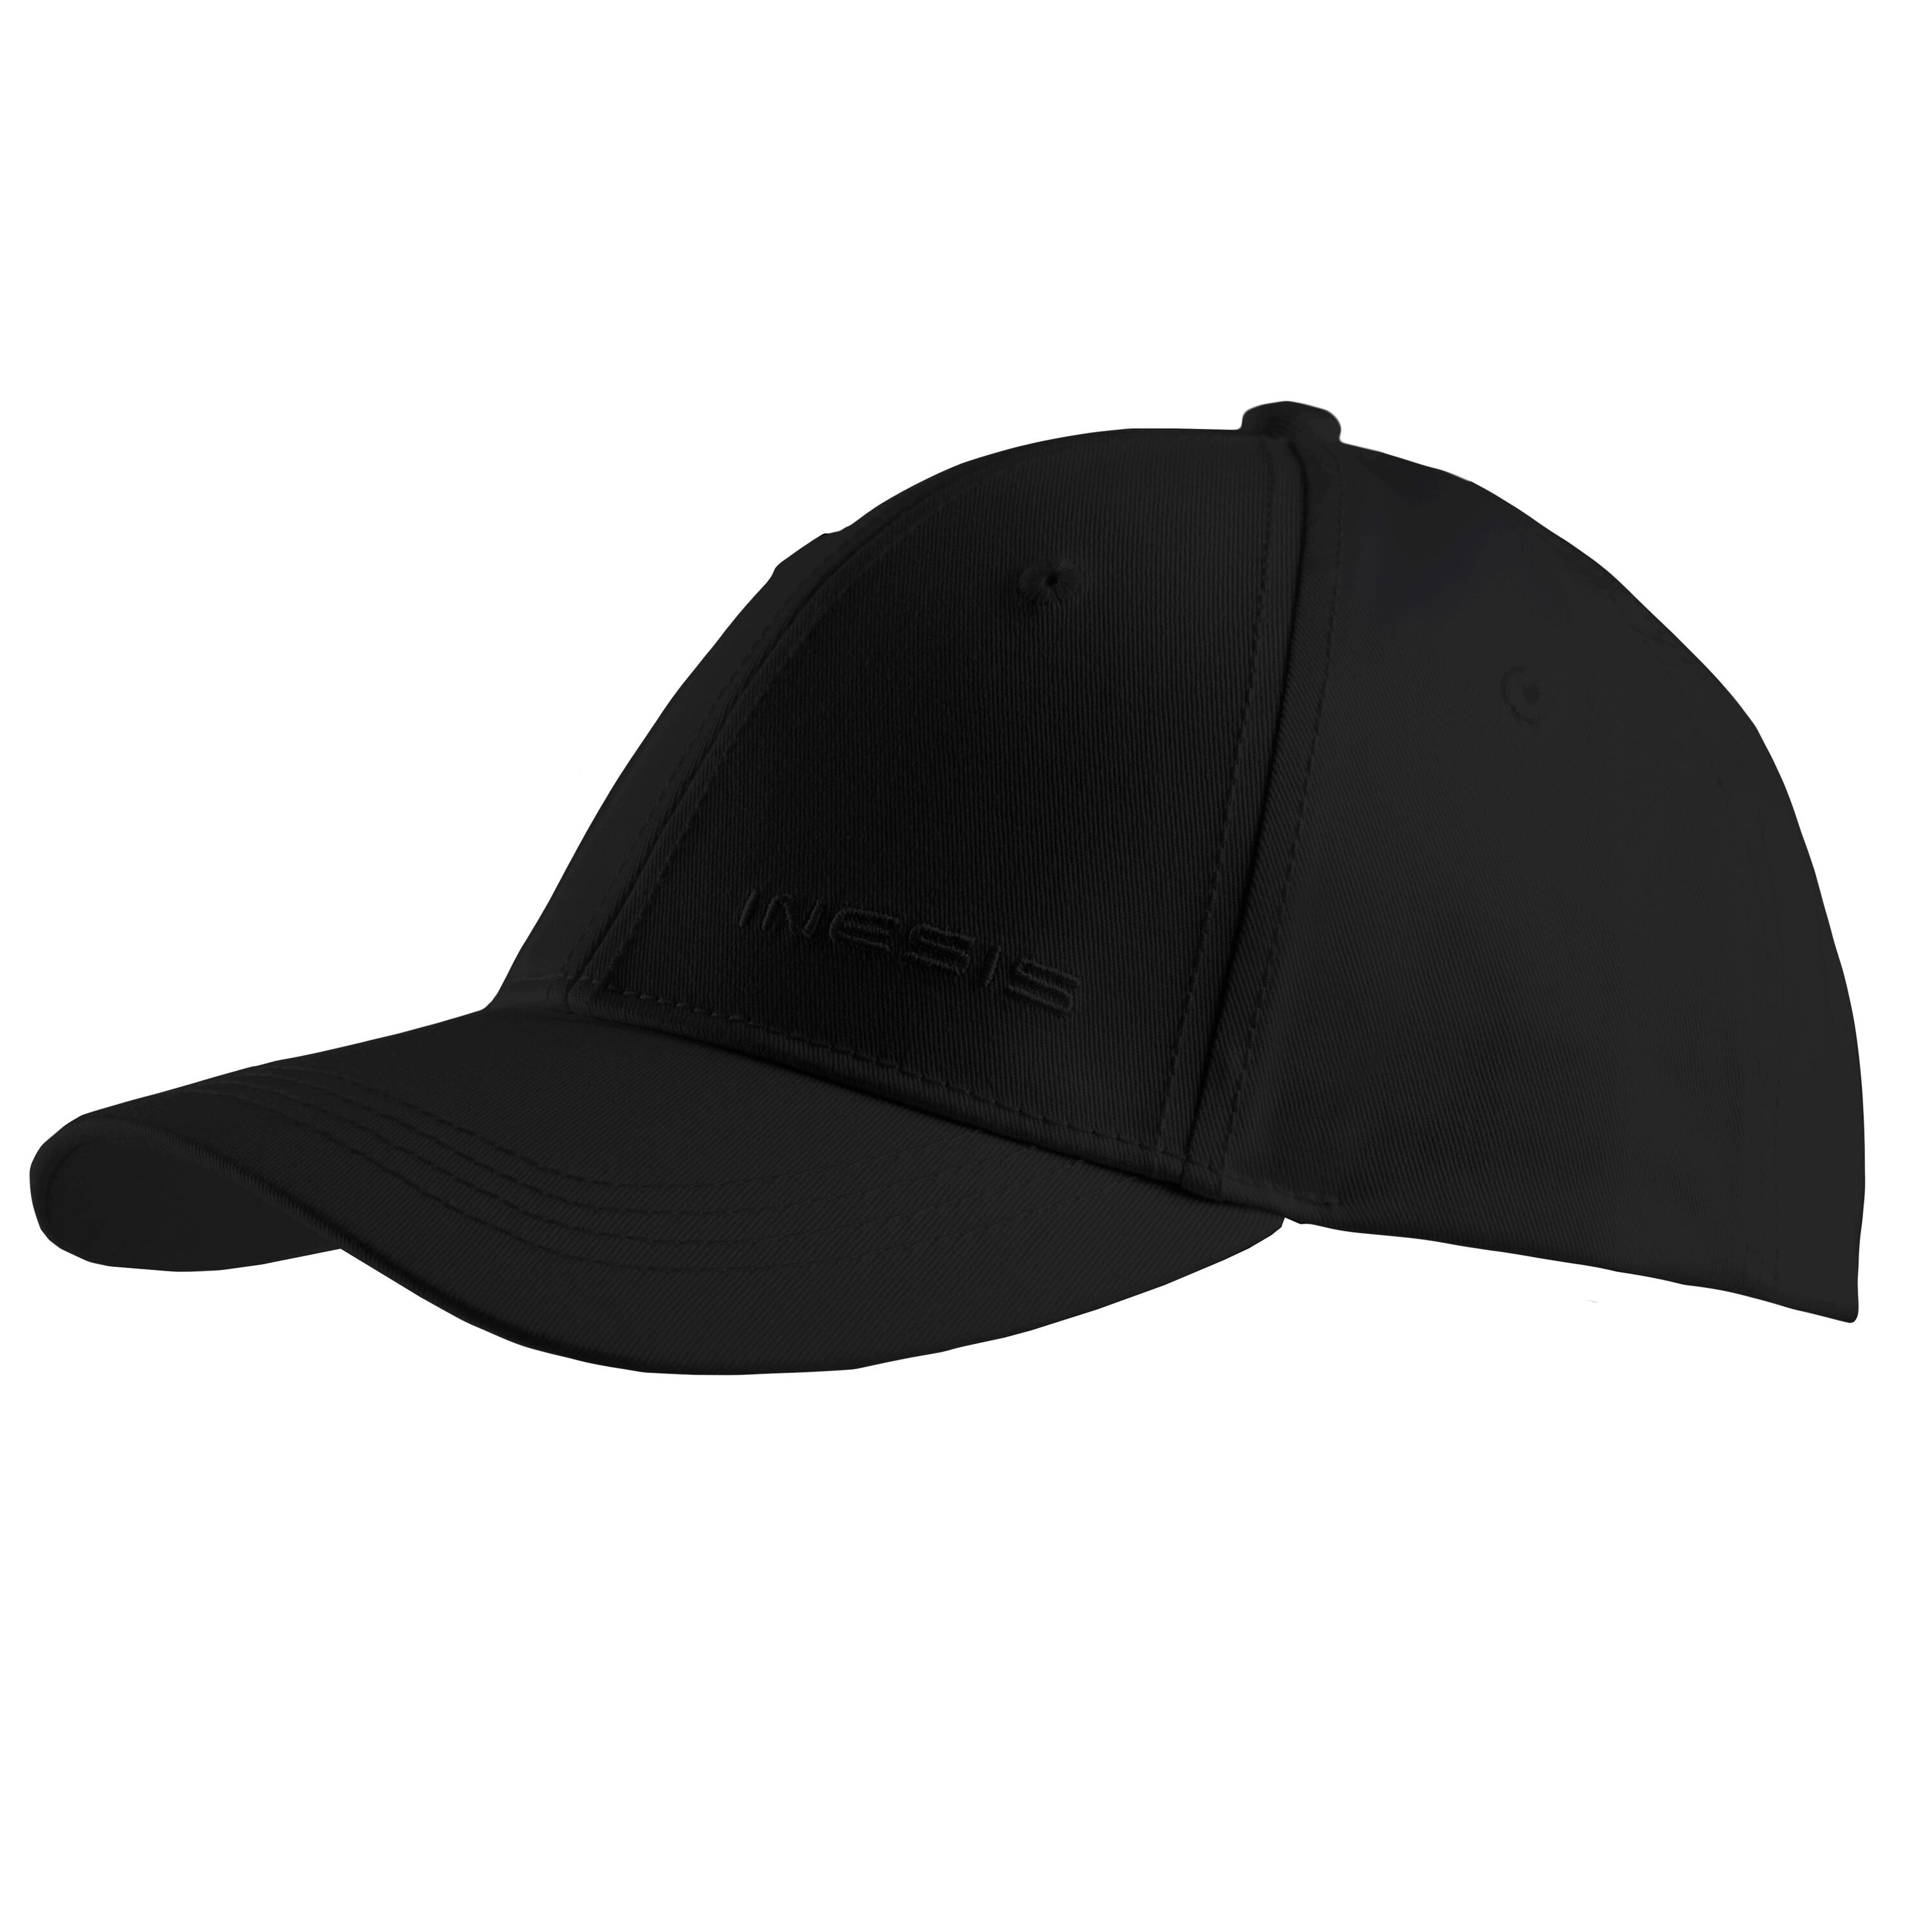 INESIS Adult's golf cap - MW 500 black